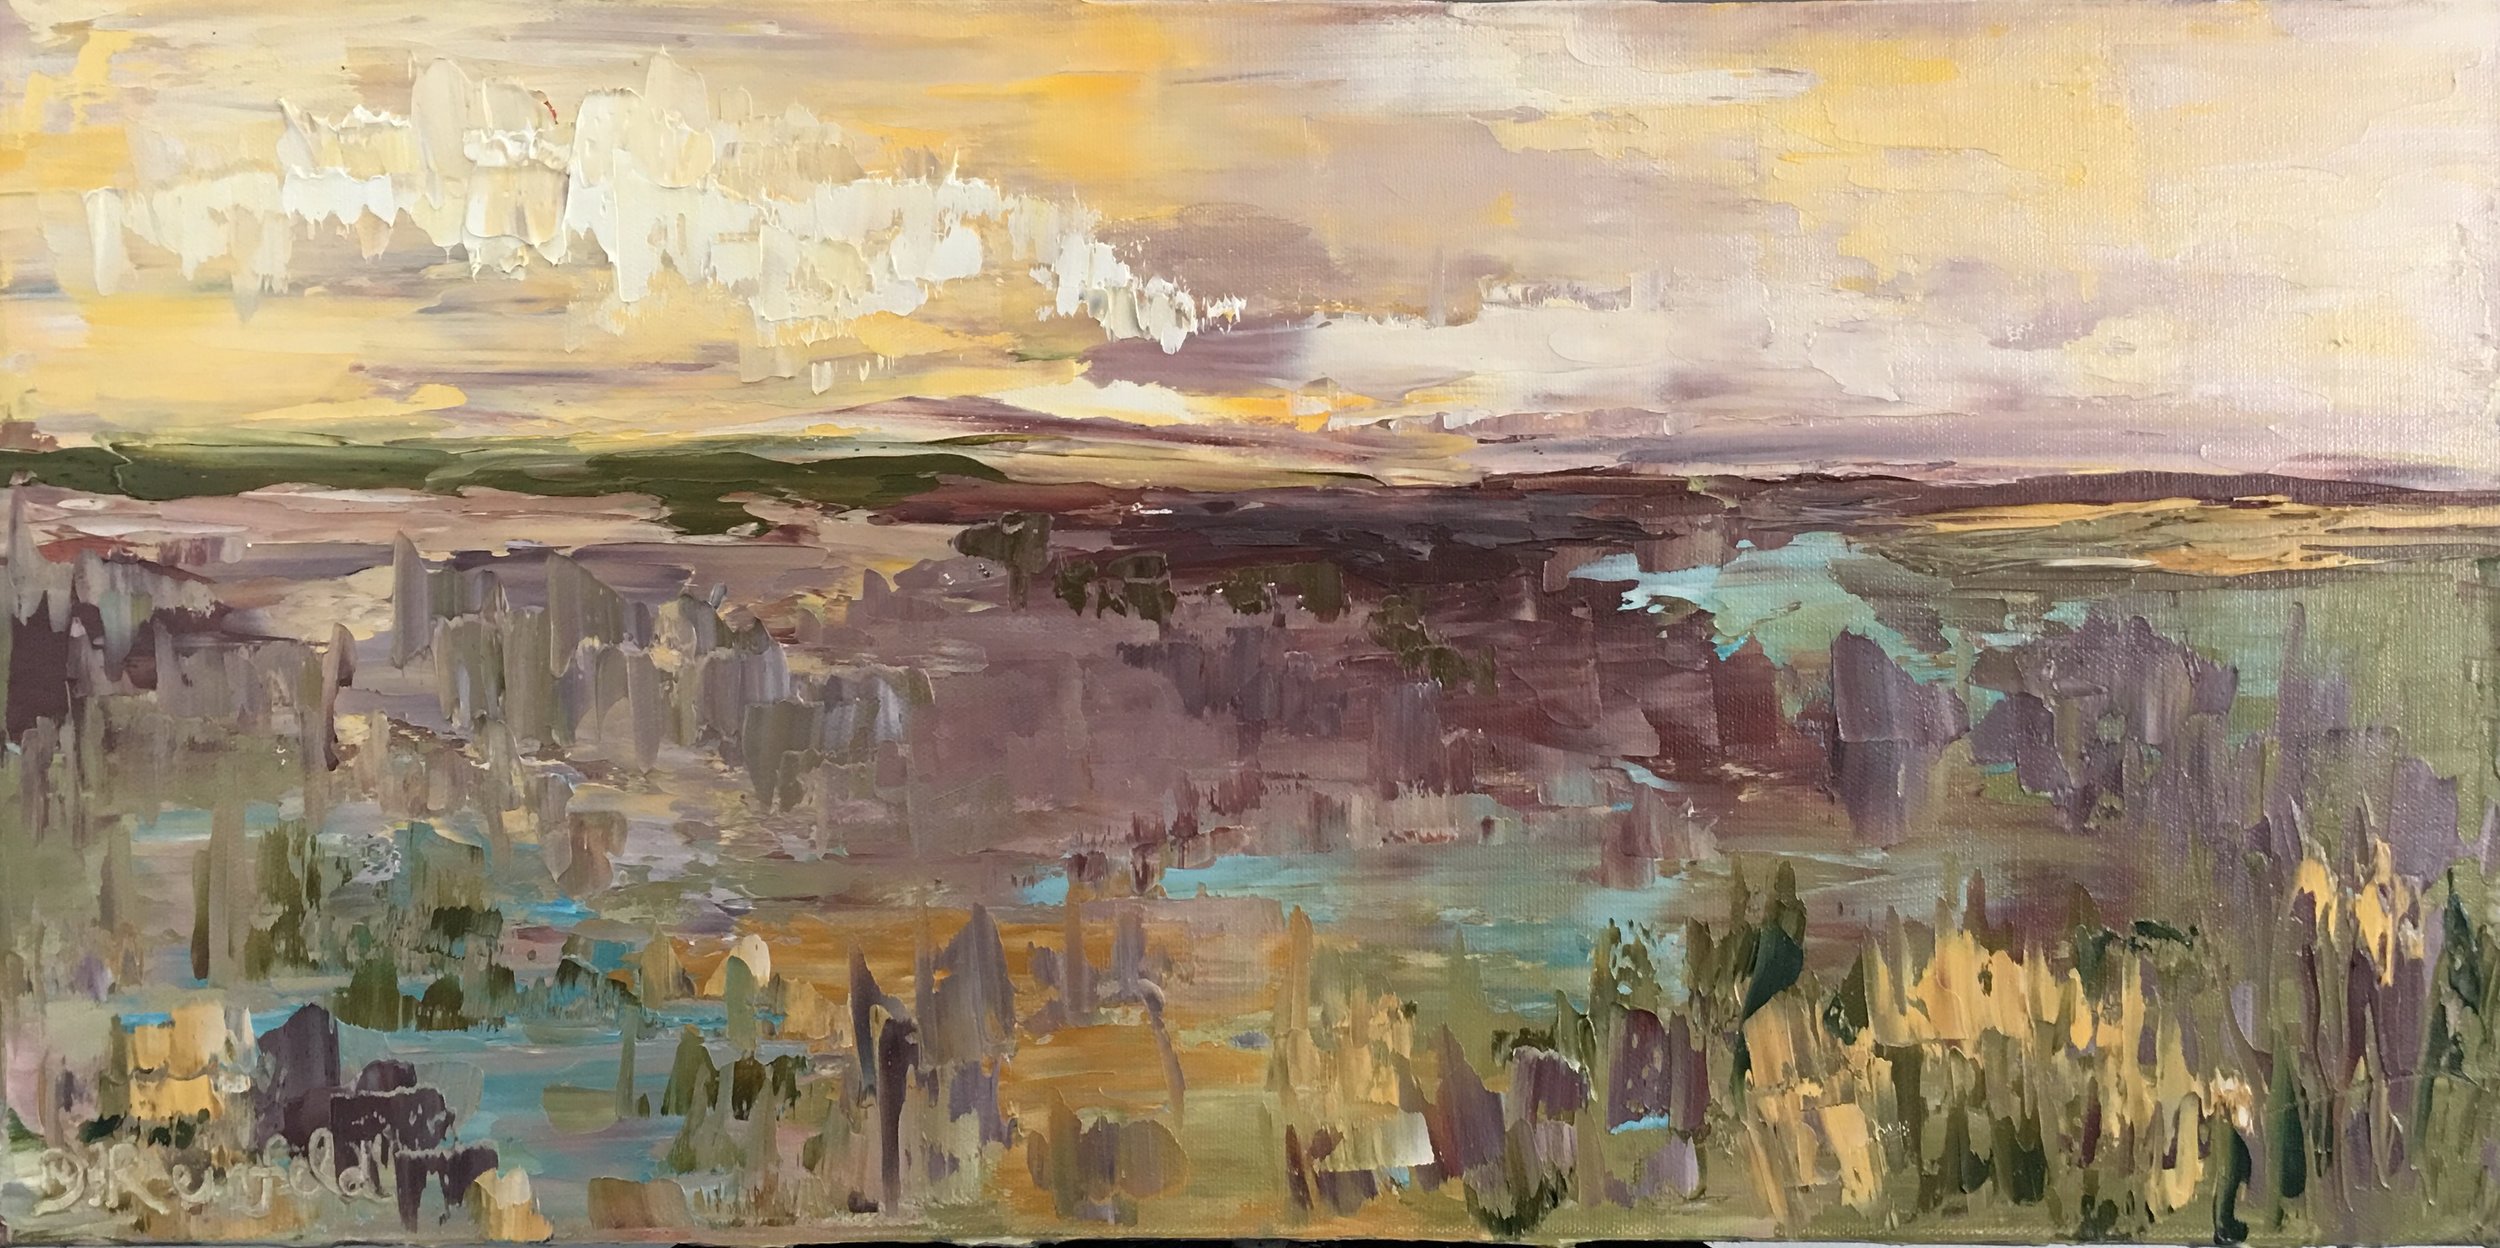 Soul of the Desert, oil on canvas, 12"x24"  $325